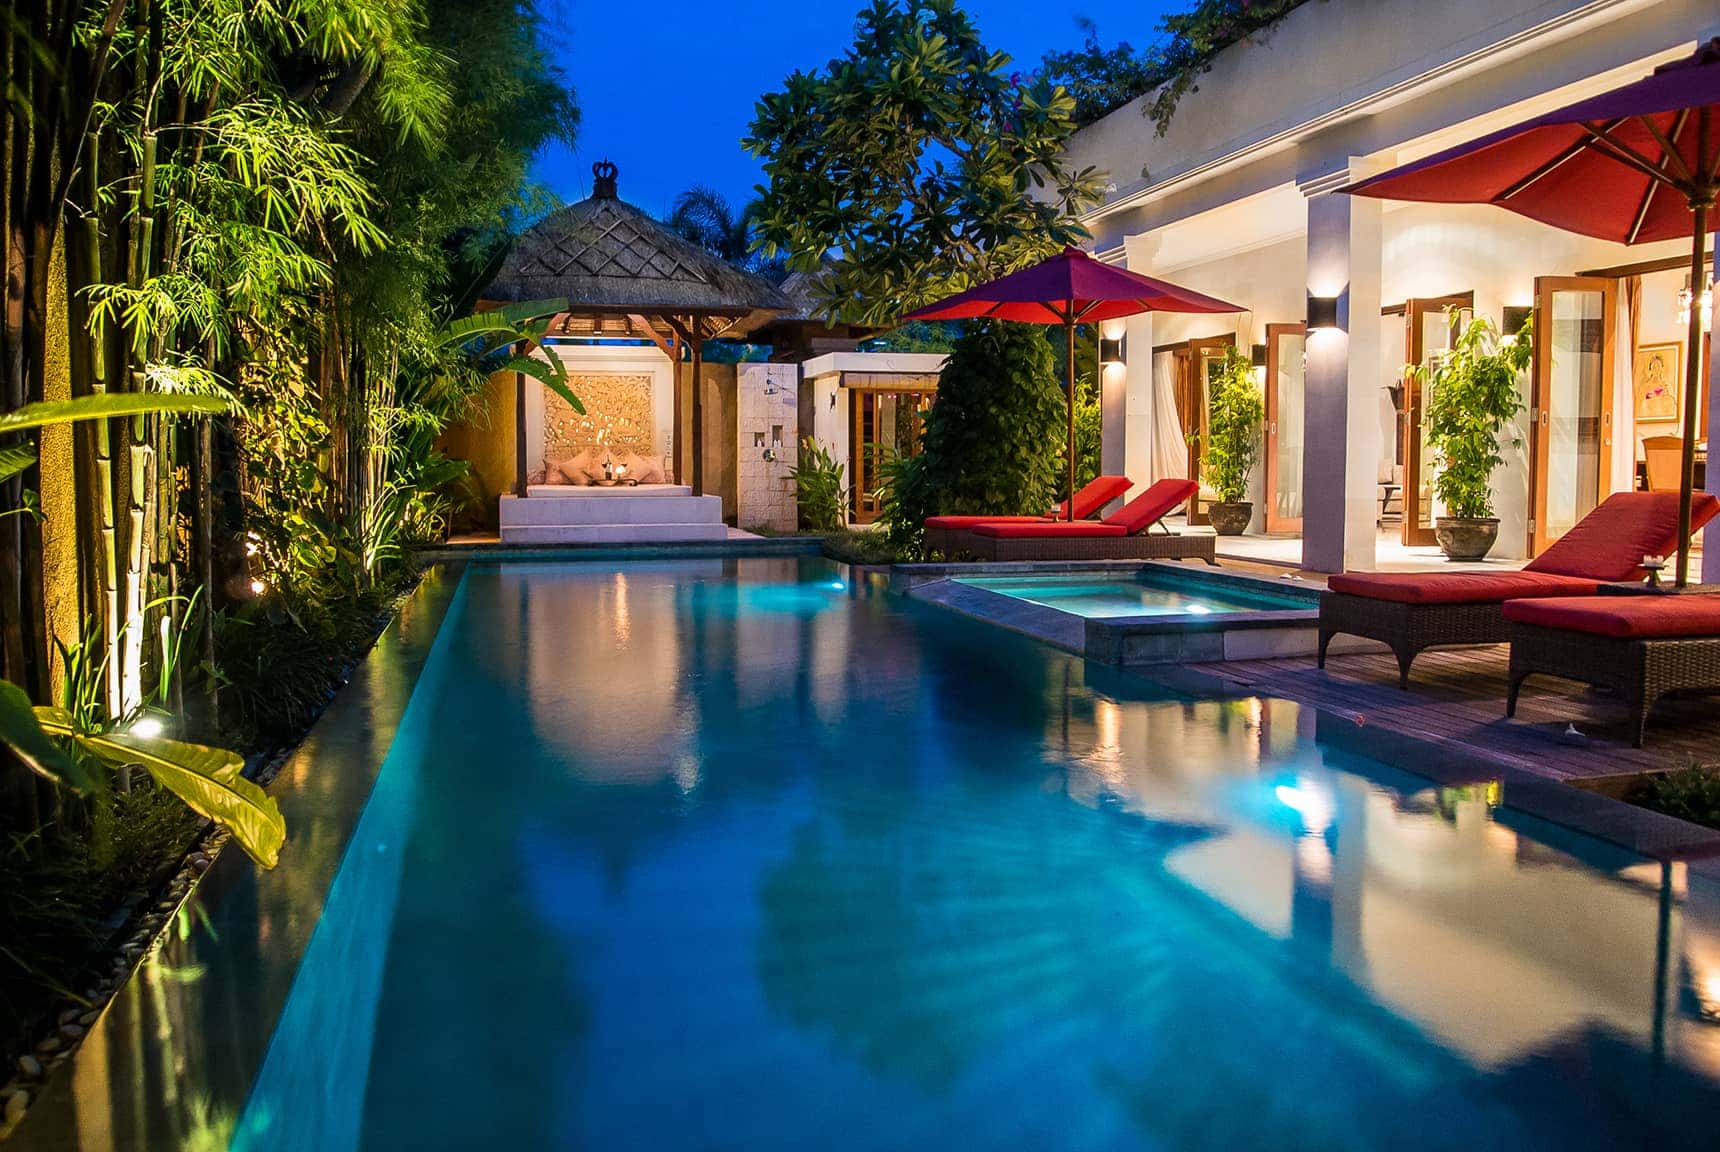 Villa Kalimaya - Seminyak, Bali Indonesia (Bali villa photography by master photographer Rick Carmichael of LuxViz)